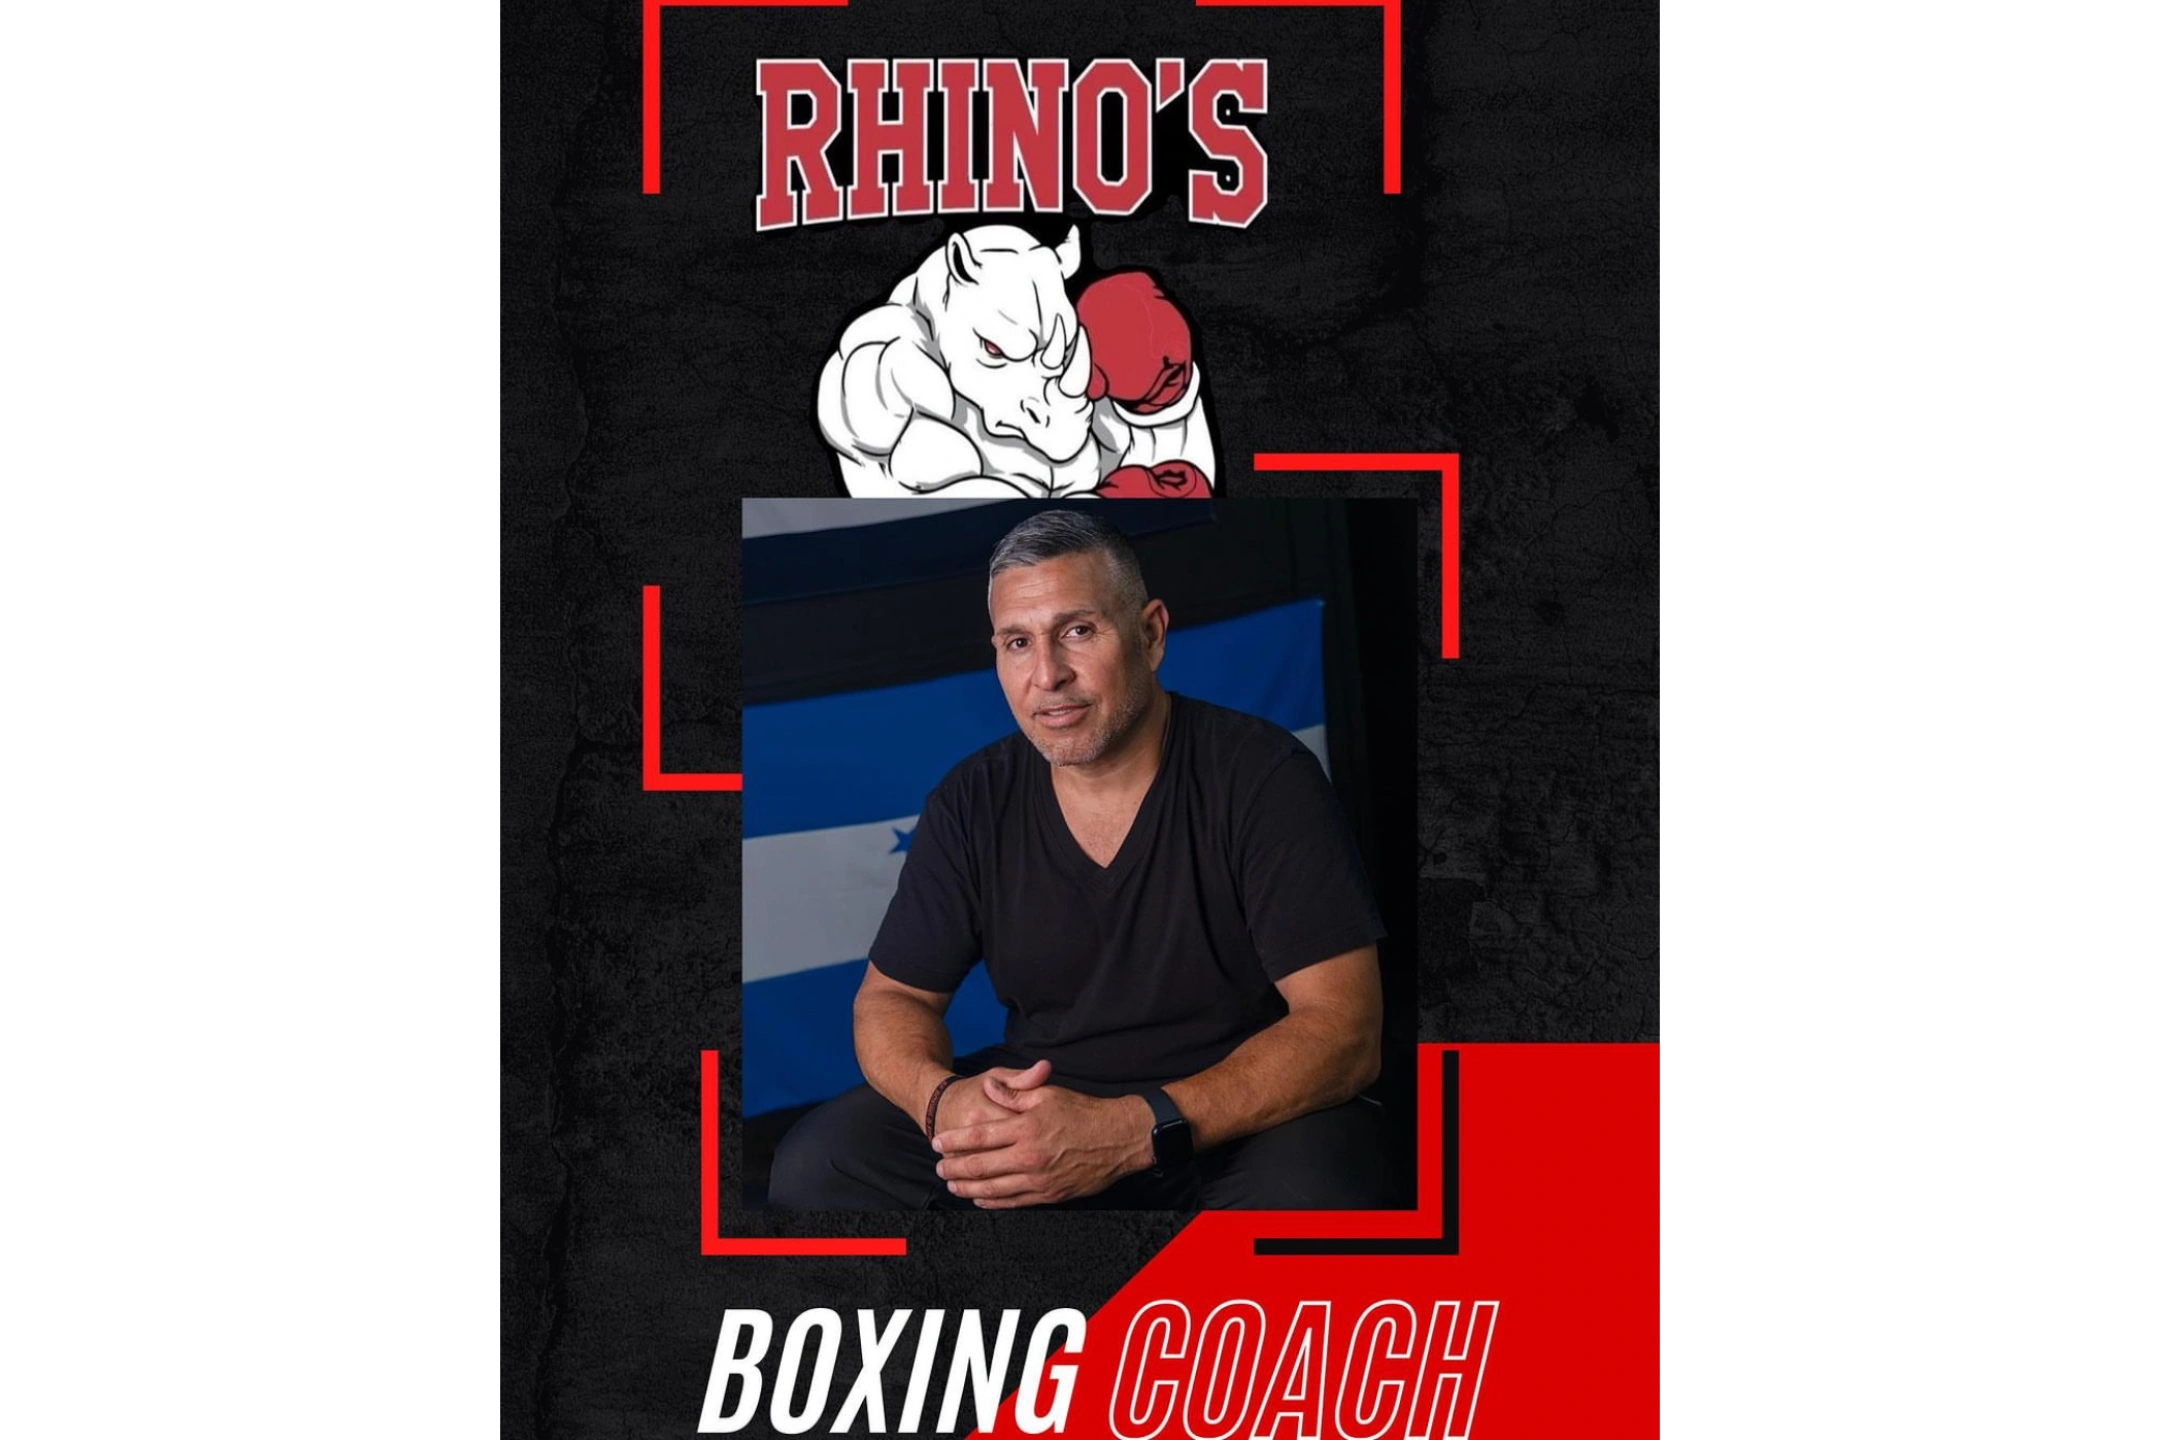 Sergio Zaragoza USA Boxing Coach